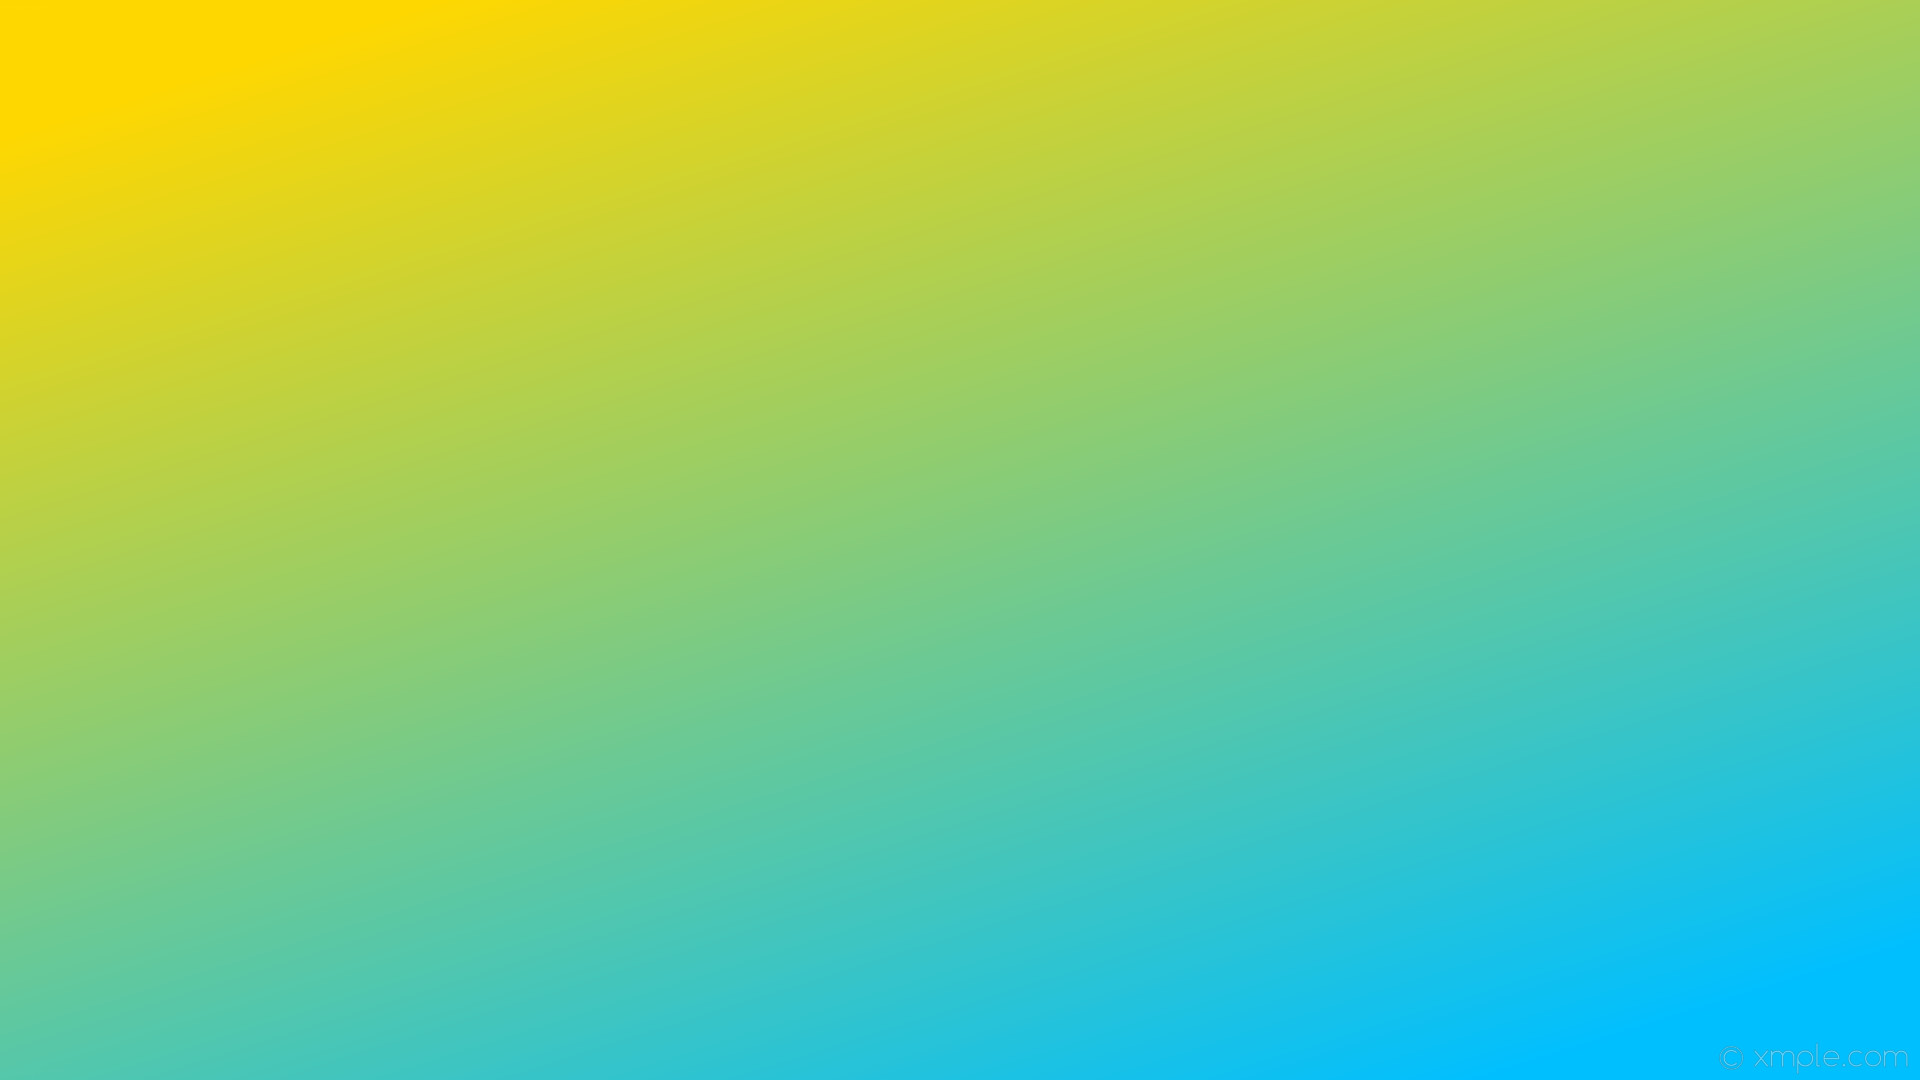 1920x1080 wallpaper gradient blue linear yellow deep sky blue gold #00bfff #ffd700  315Â°